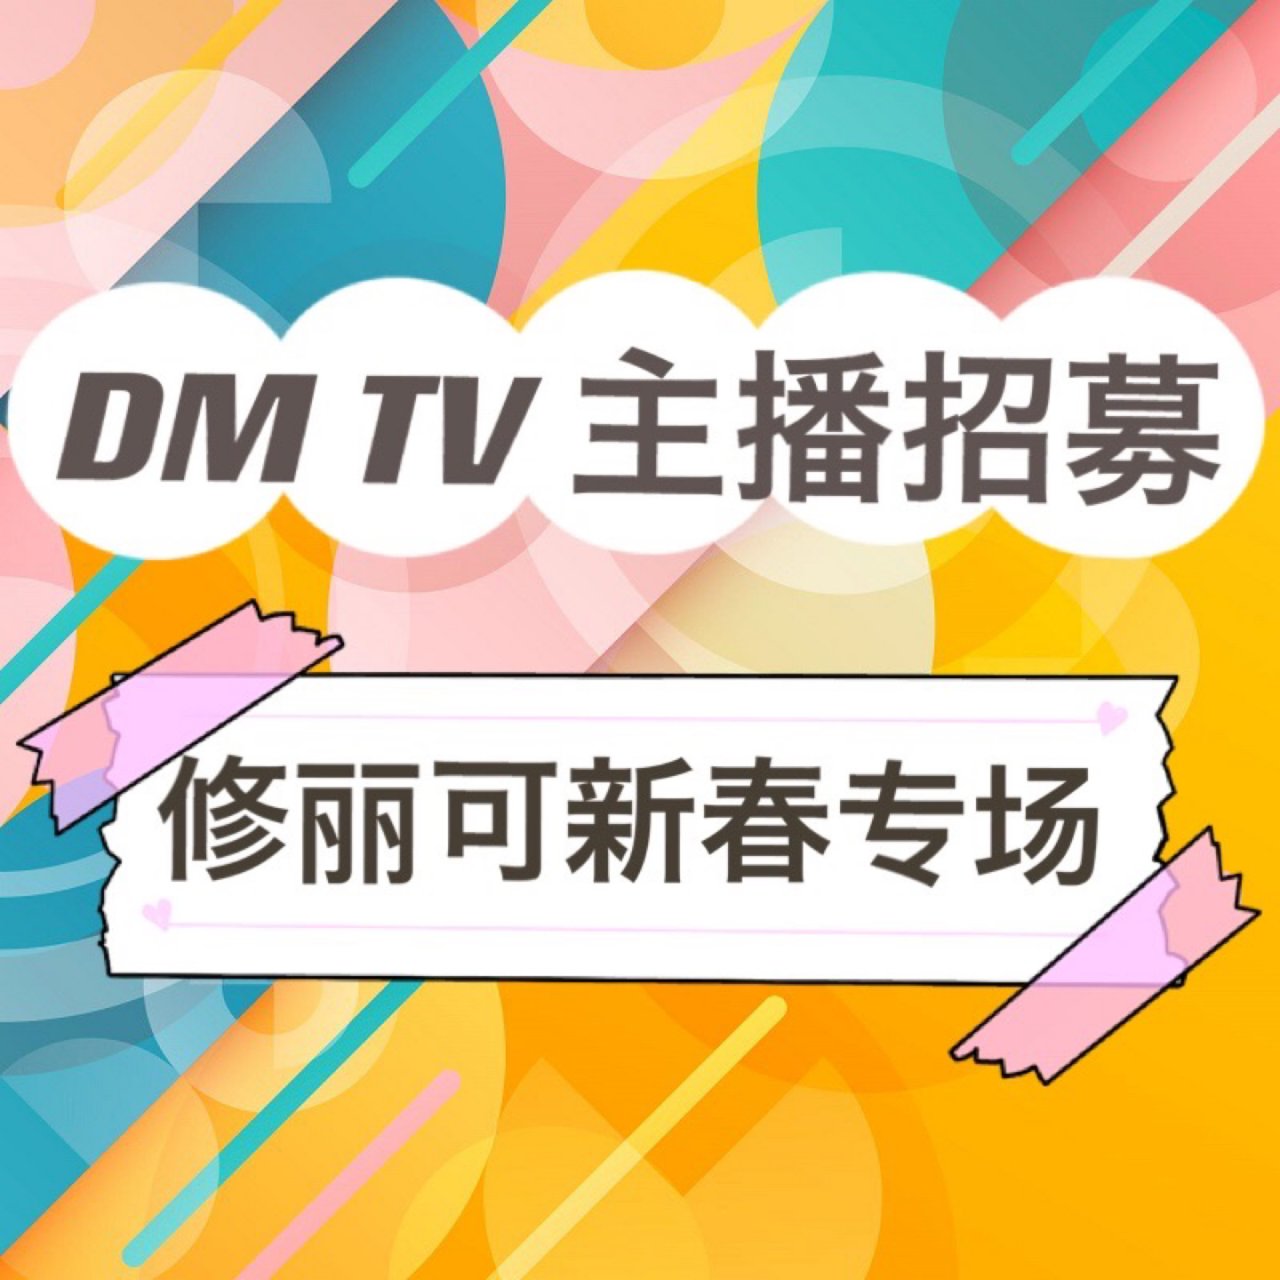 DM TV主播招募|修丽可2/9新春专场...